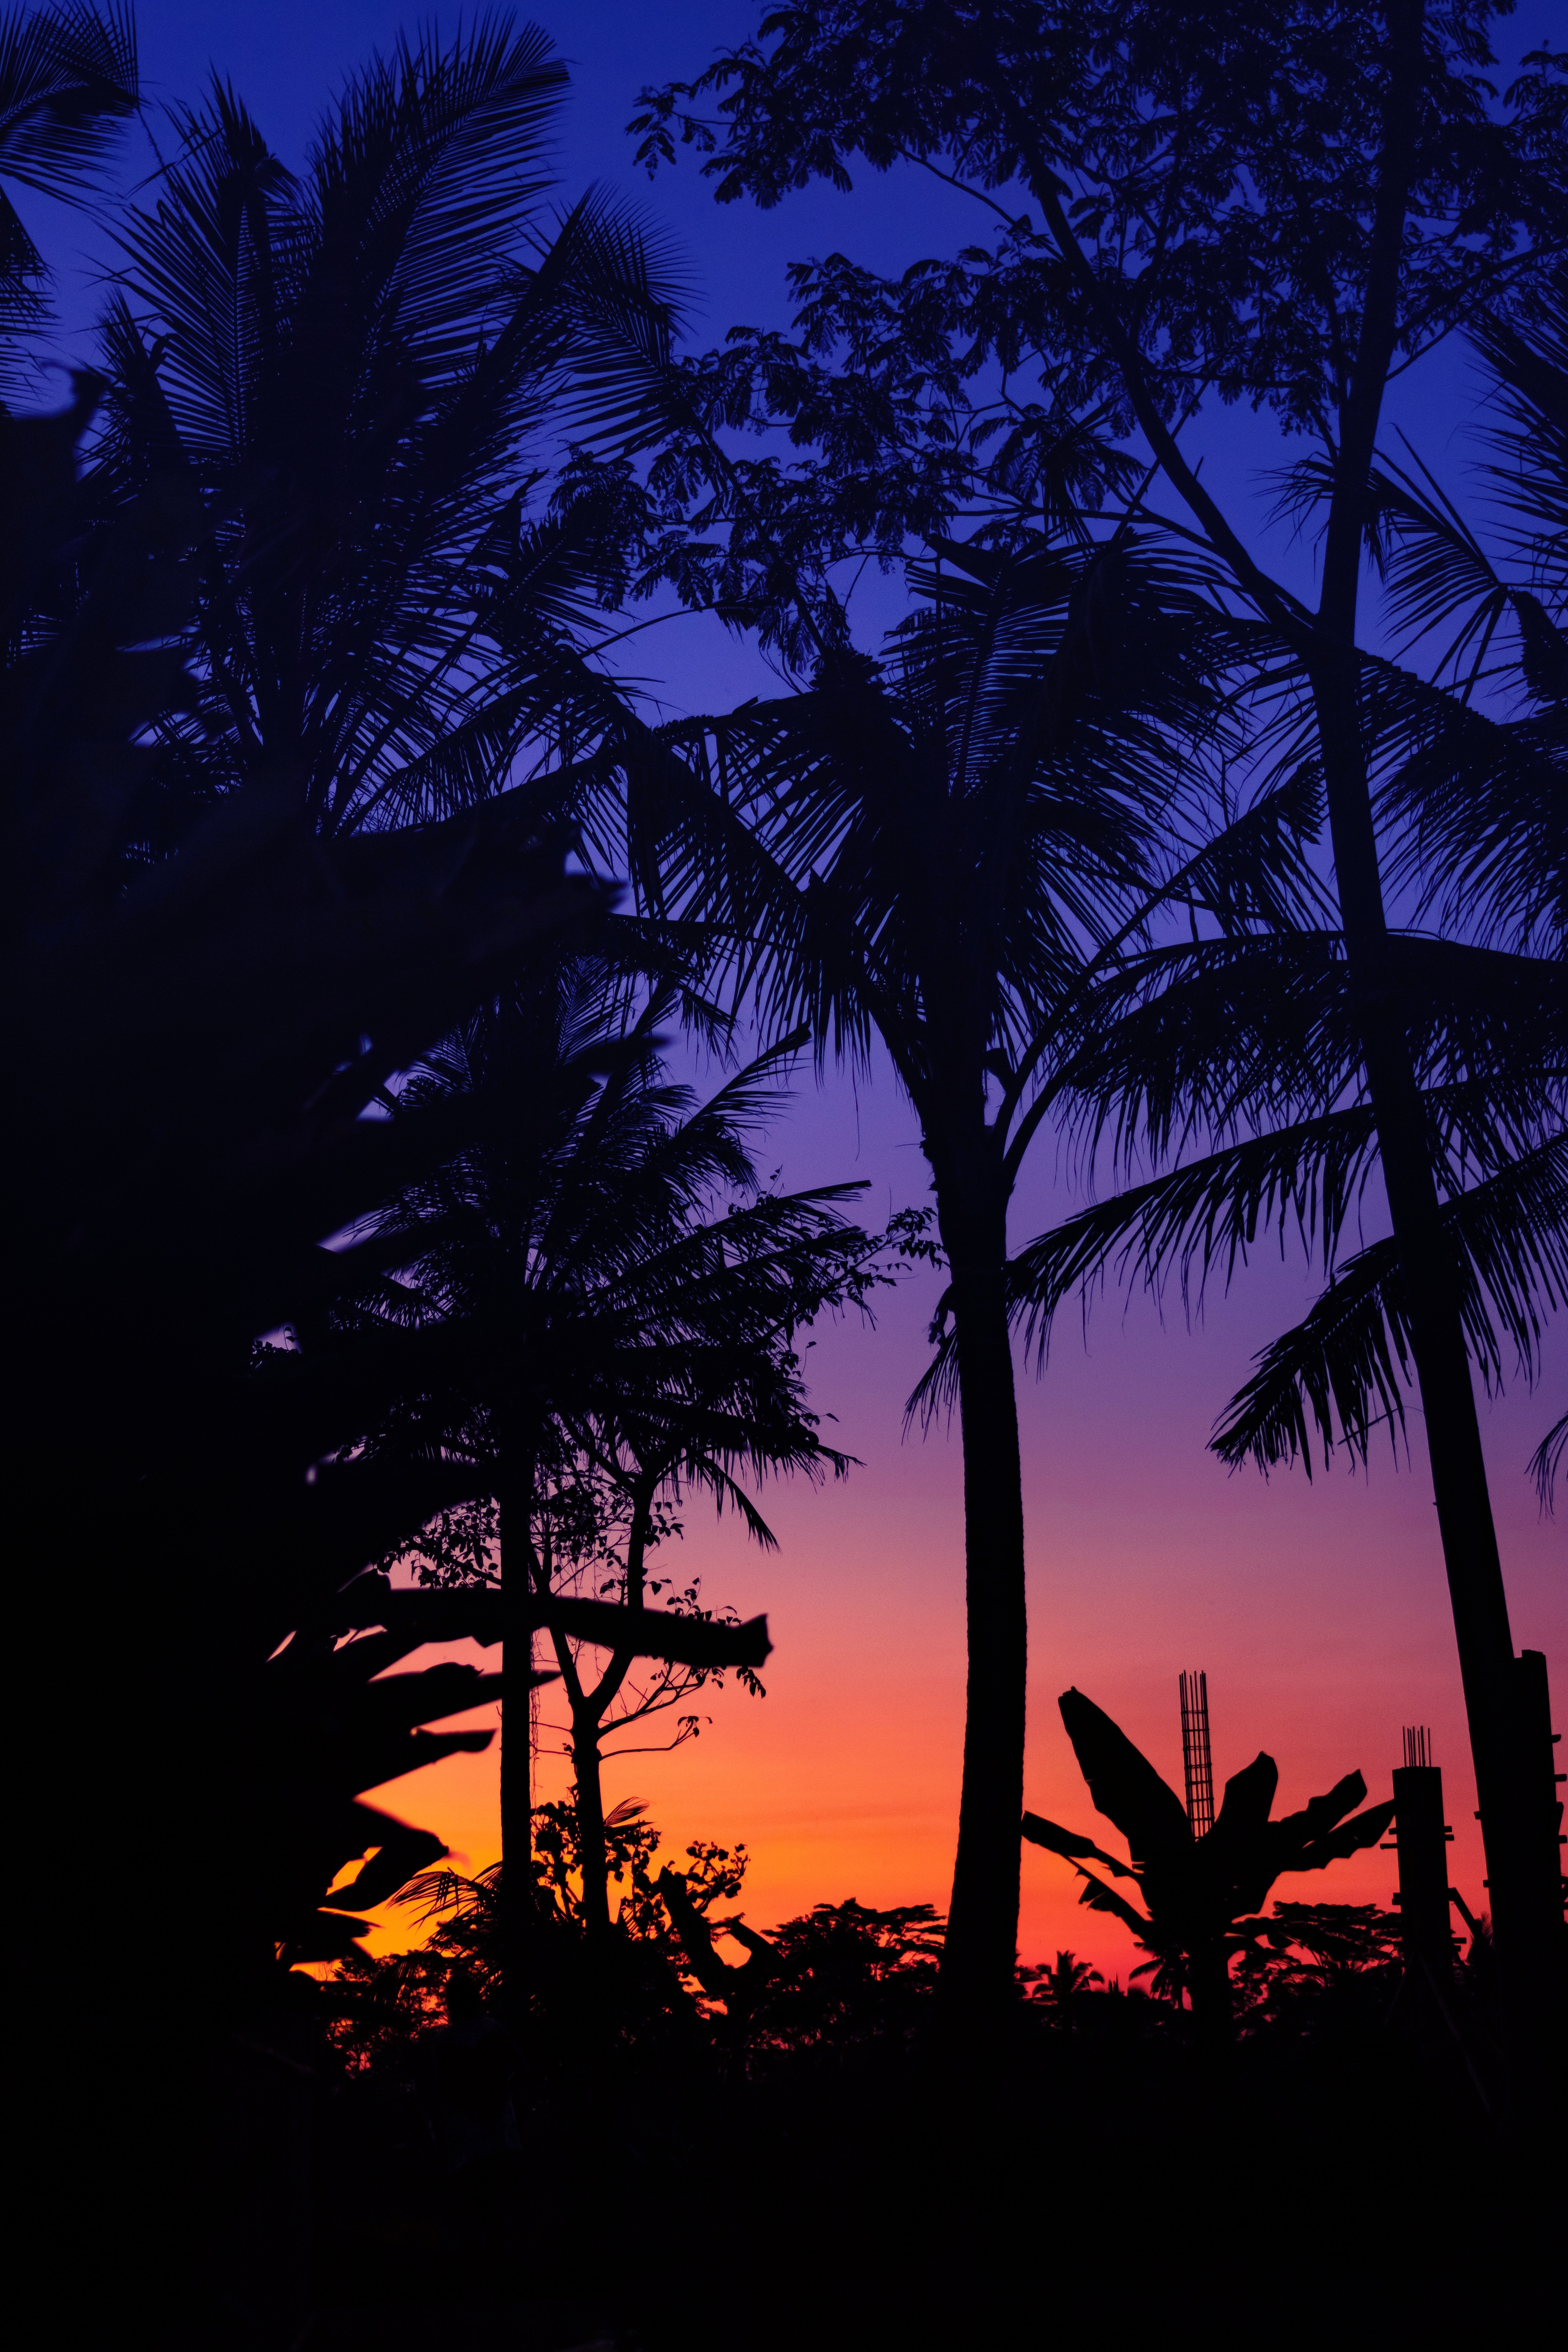 twilight, sunset, palms, dark, silhouettes, dusk